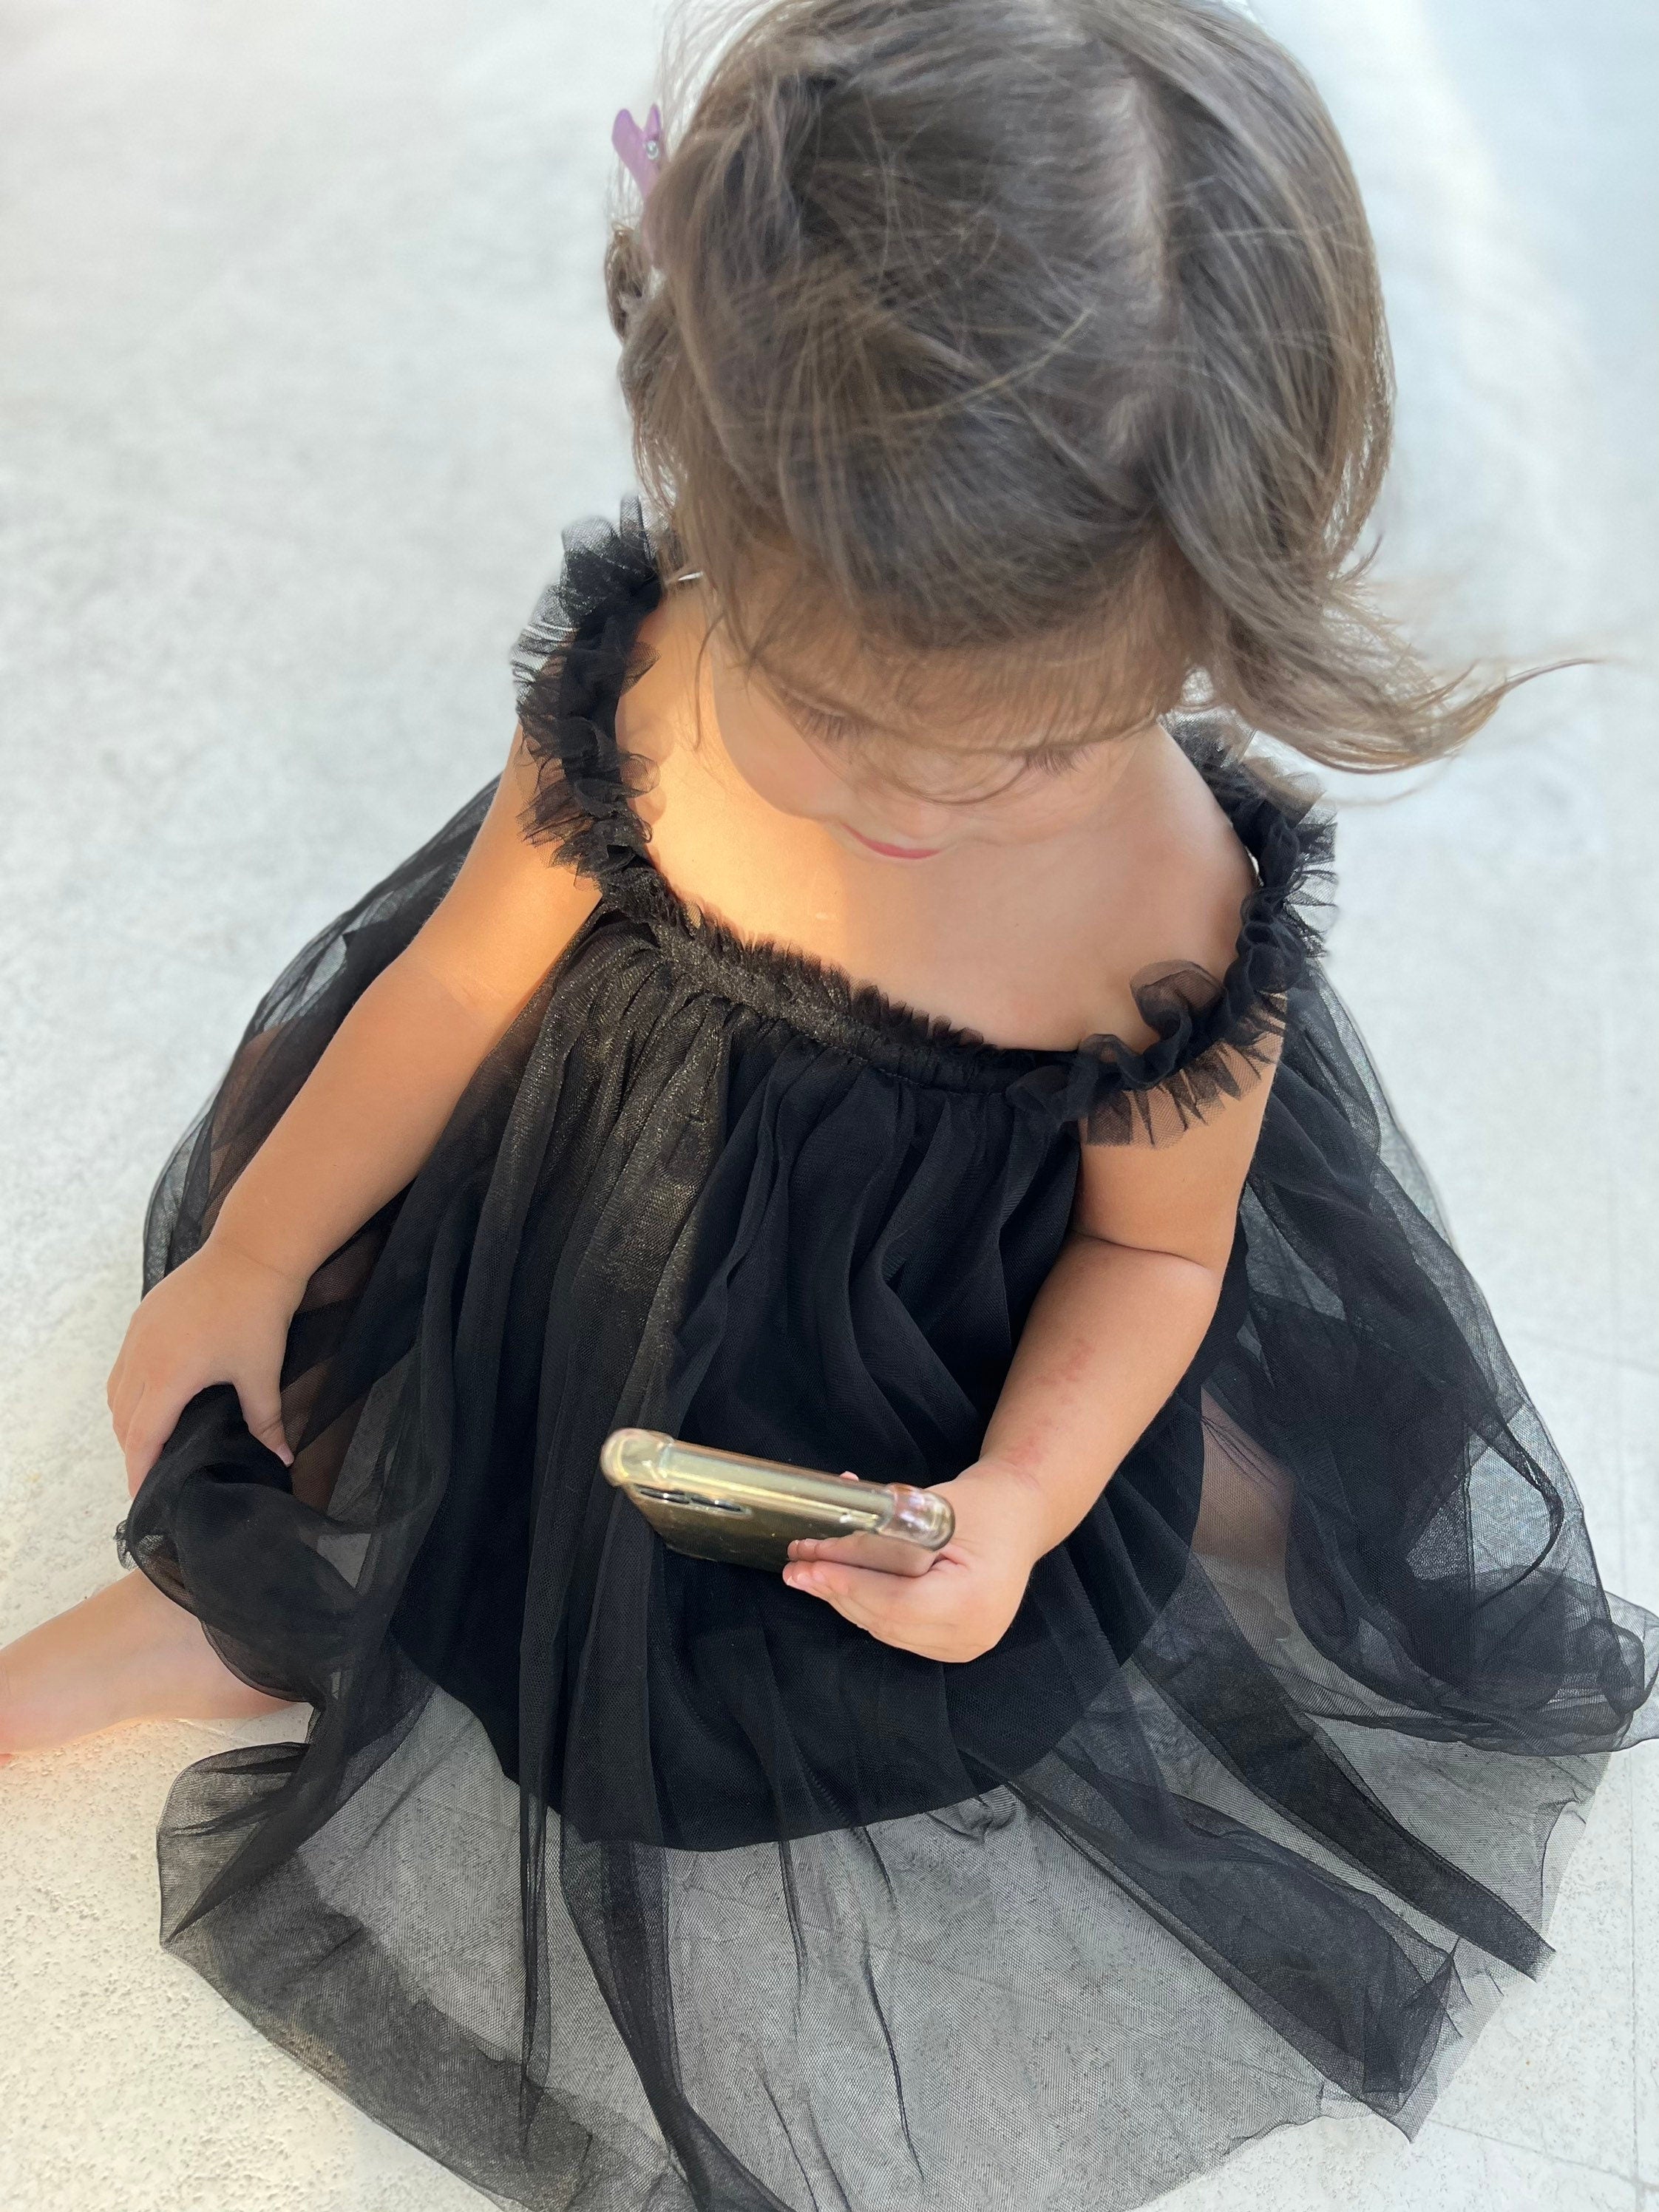 Plain Black Baby Dress